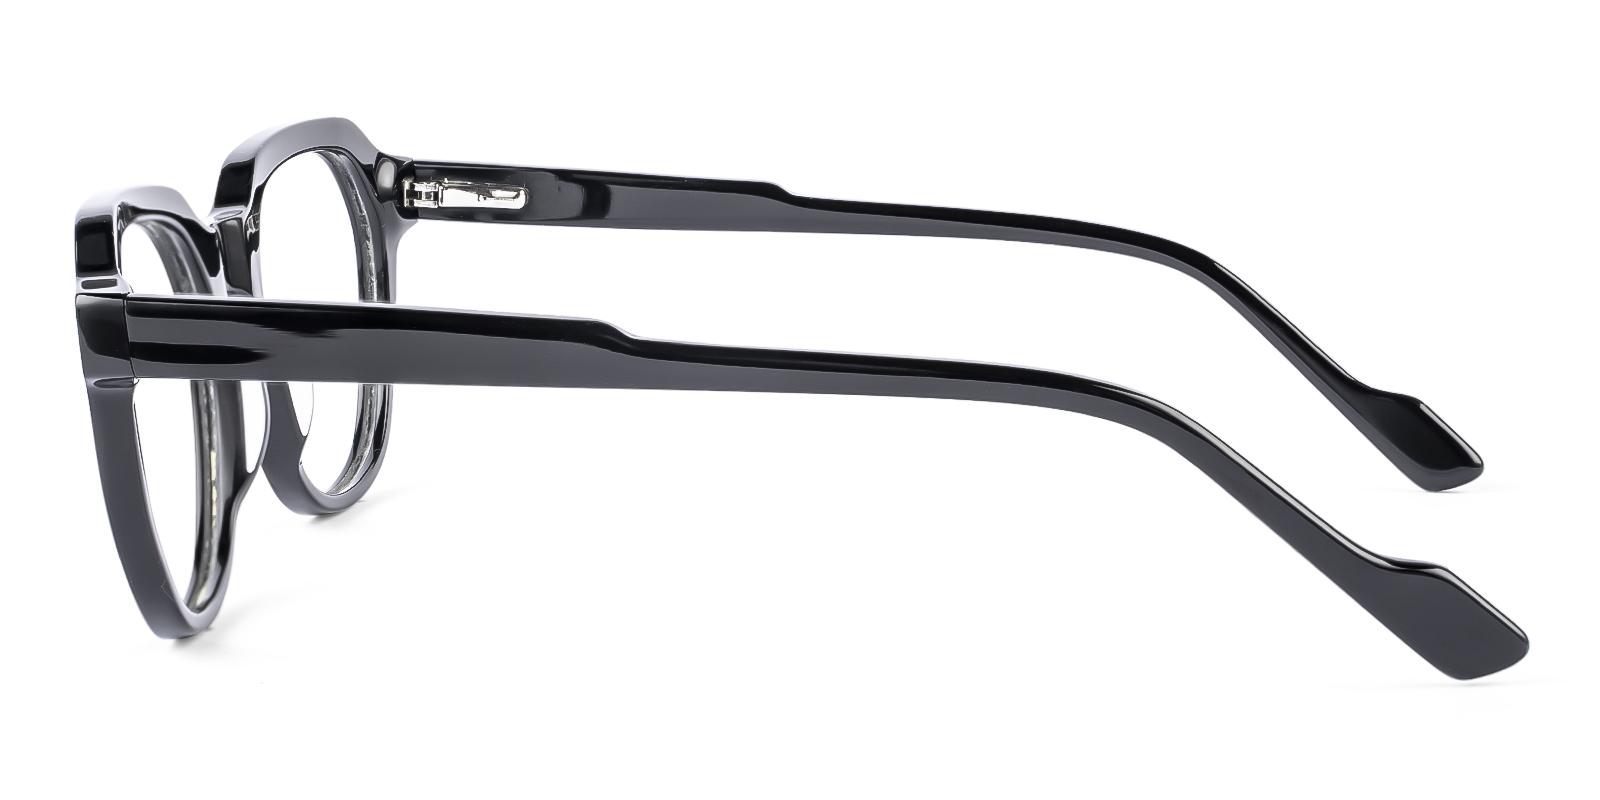 Sarcoress Black Acetate Eyeglasses , SpringHinges , UniversalBridgeFit Frames from ABBE Glasses